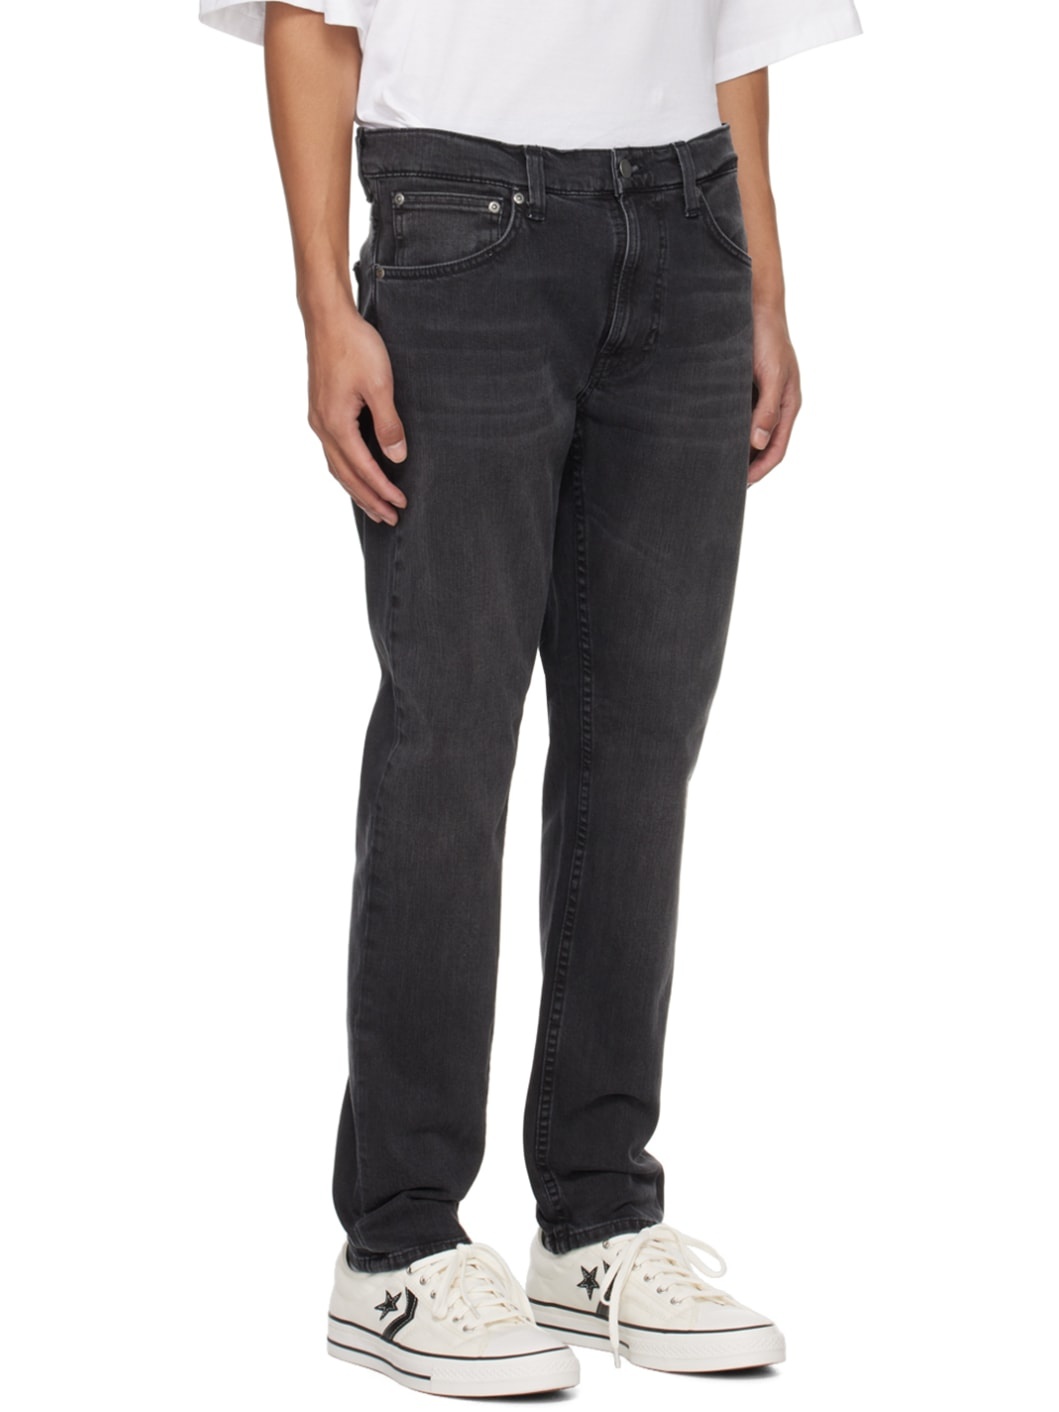 Black Lean Dean Jeans - 2